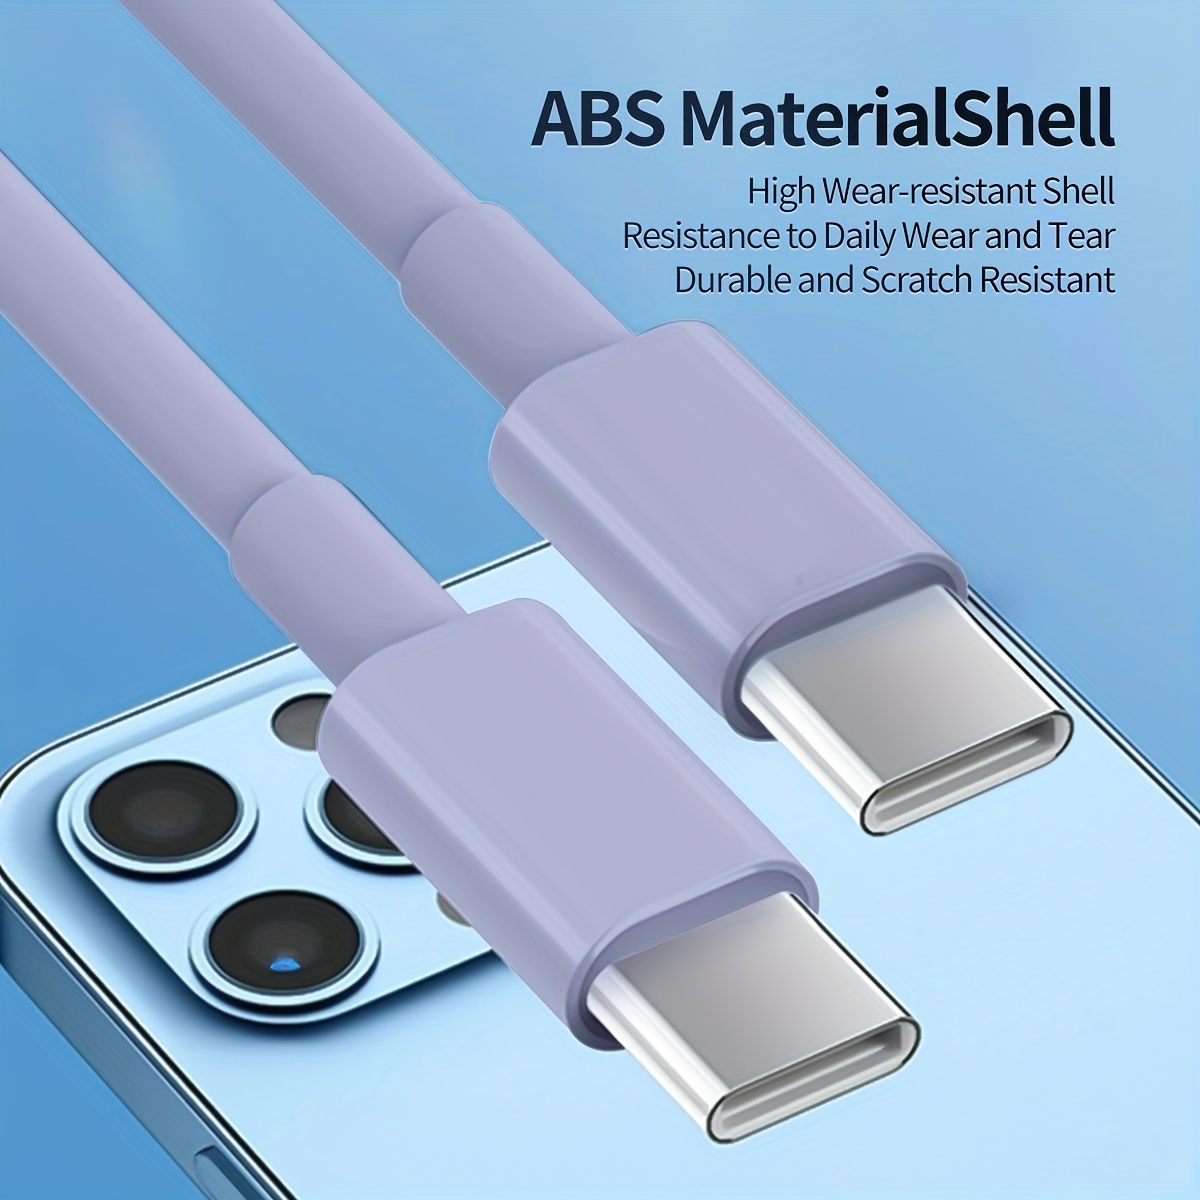 Samsung Câble USB-C à USB-C 3 pieds (1m) - LE MAC URBAIN